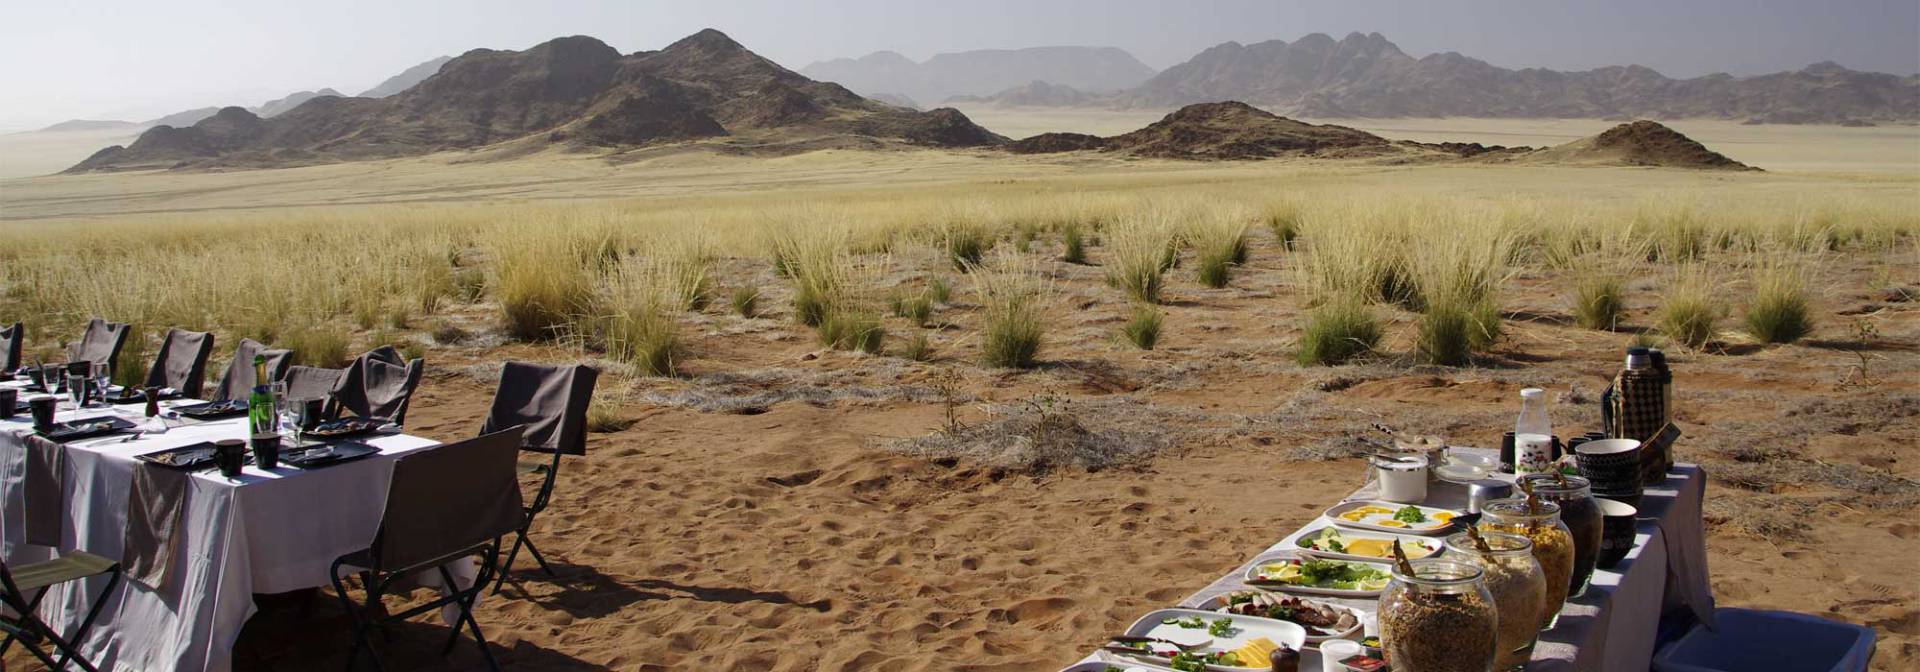 Lunch in the Namib desert